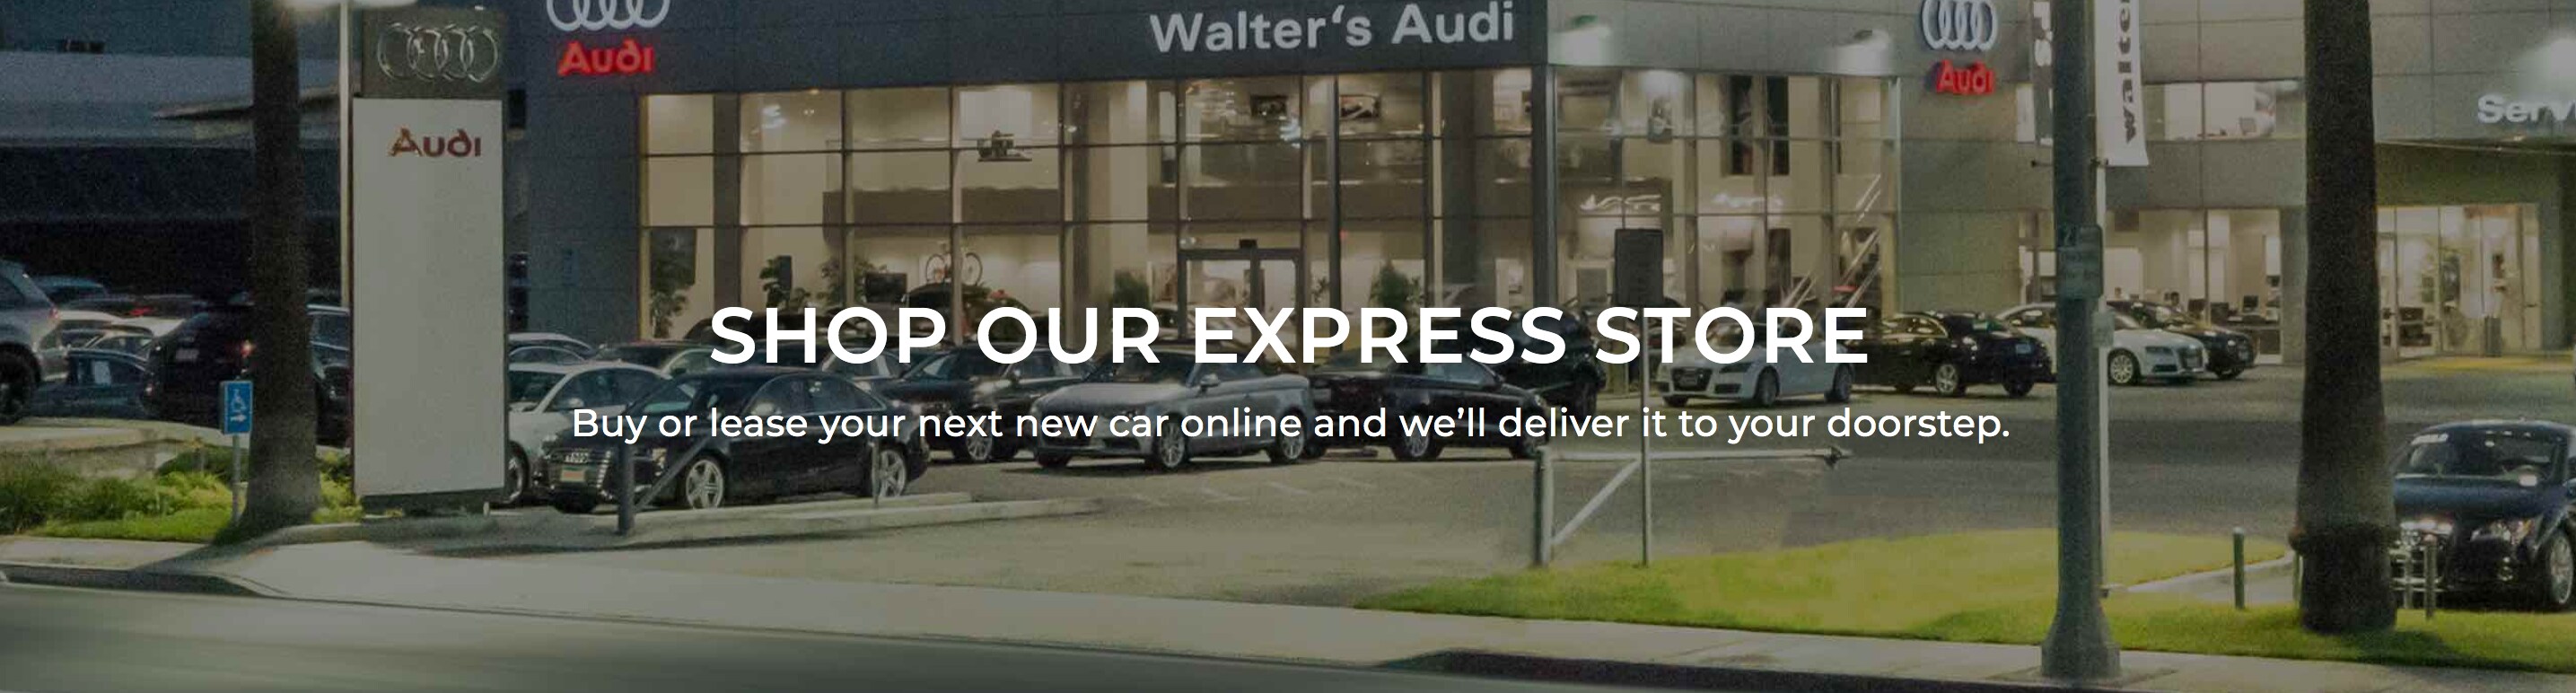 Walter's Audi Express Store